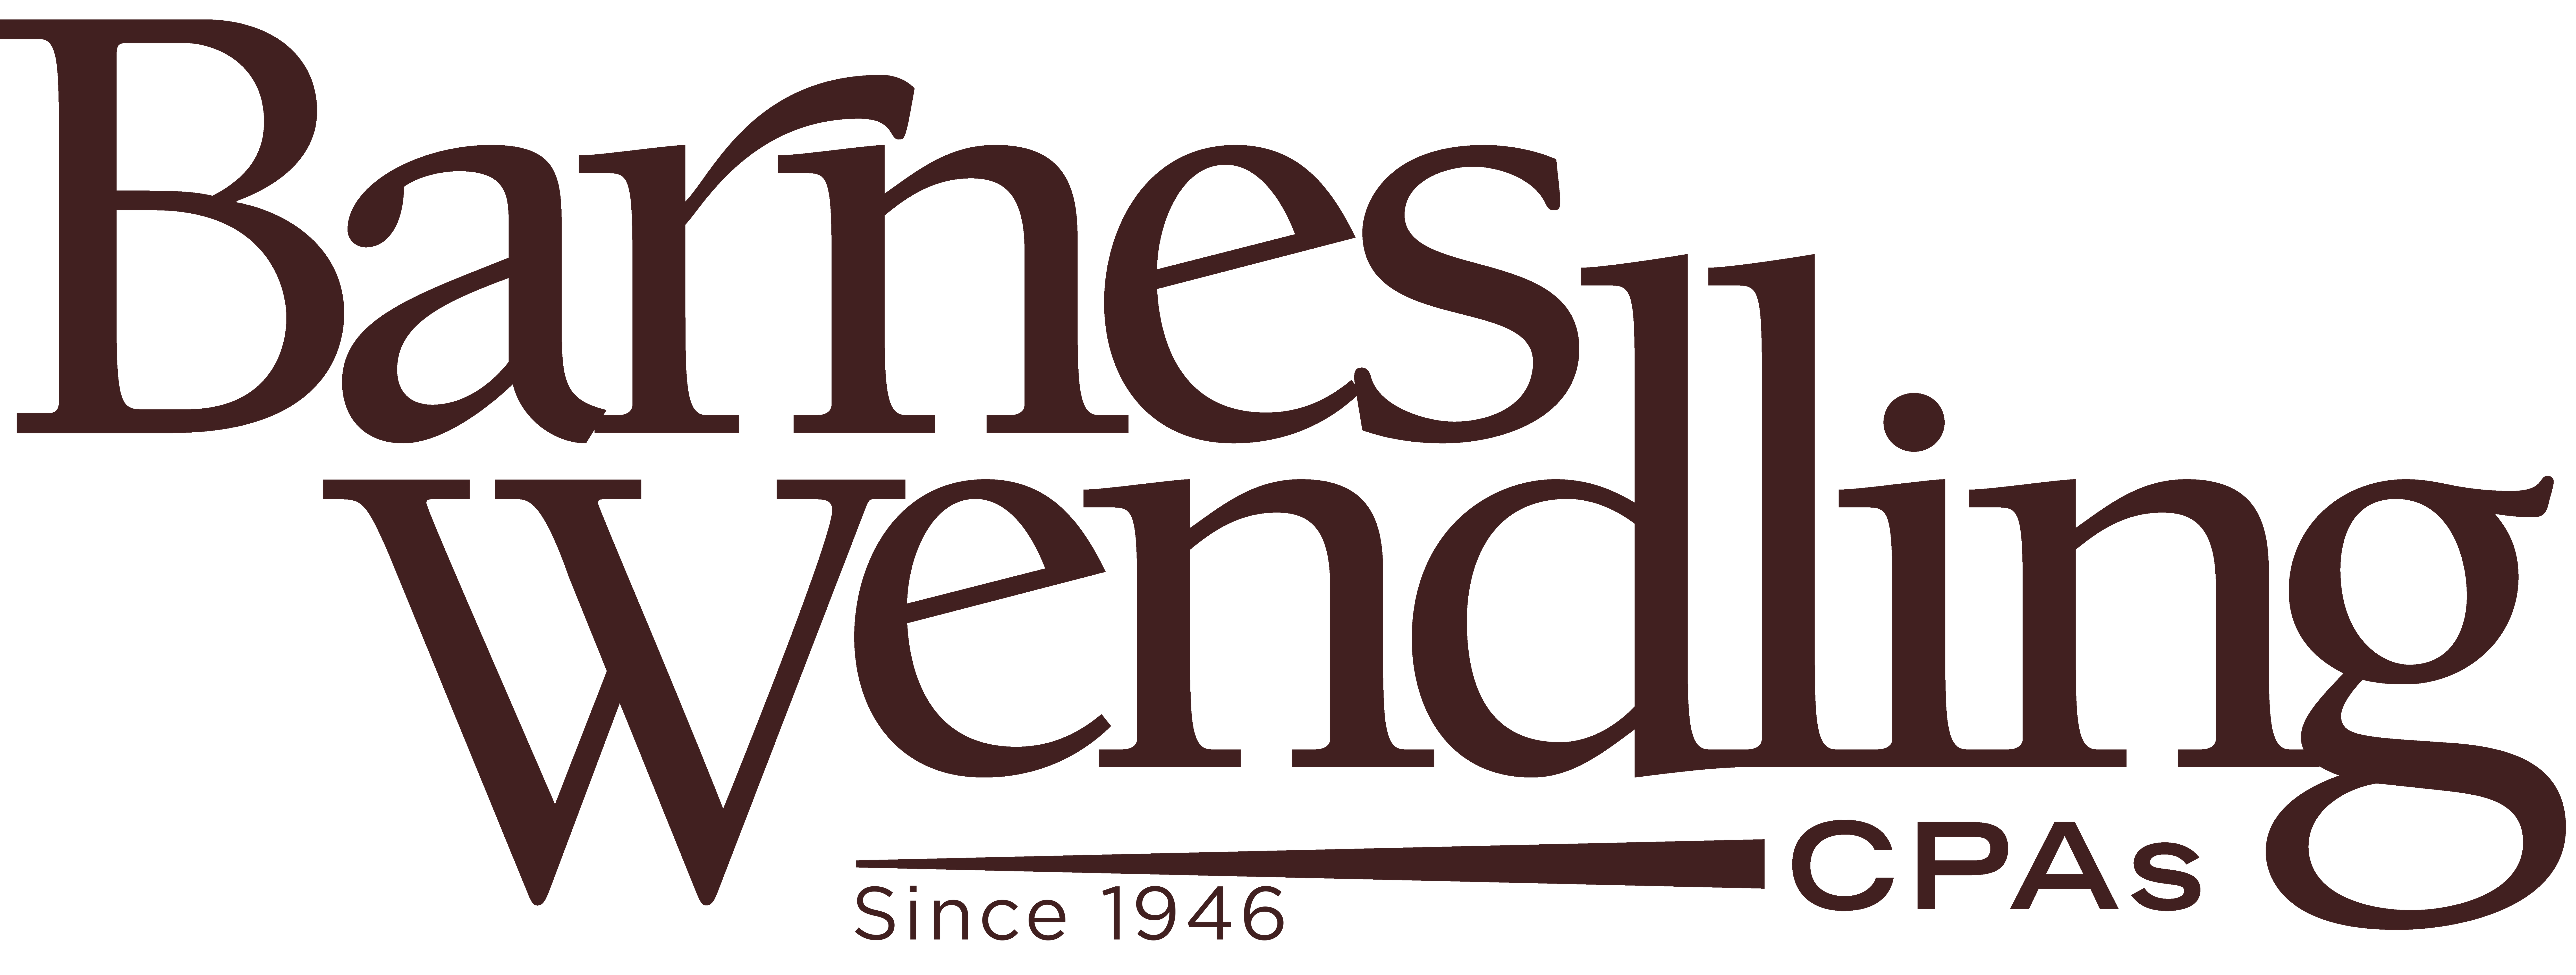 Barnes Wendling logo burgundy_high res